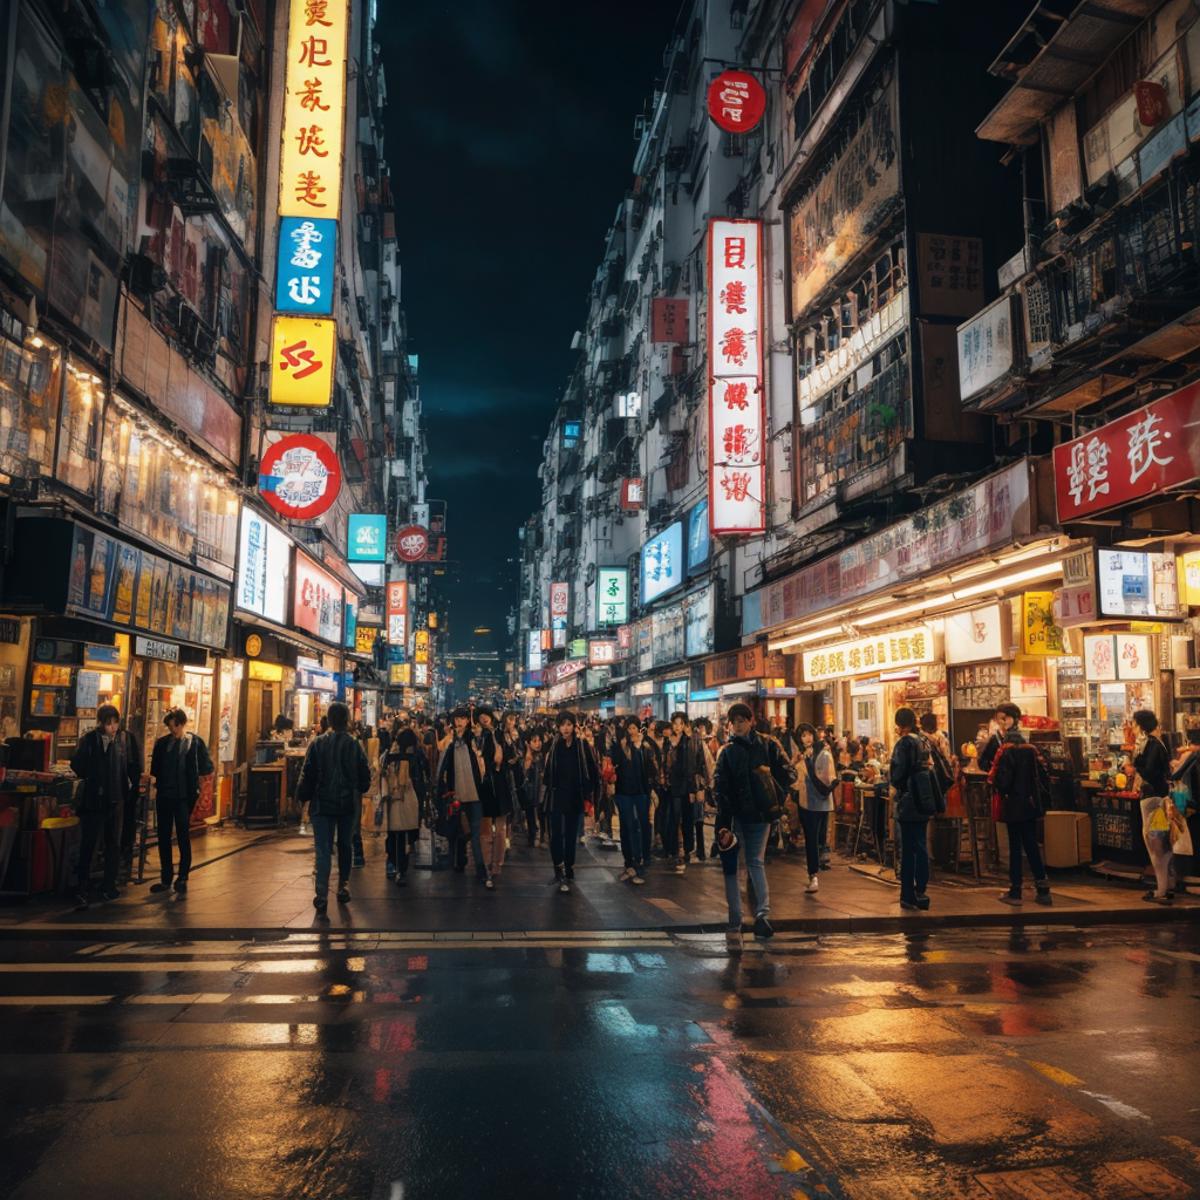 HongKong by Night - Film Color image by buzimage